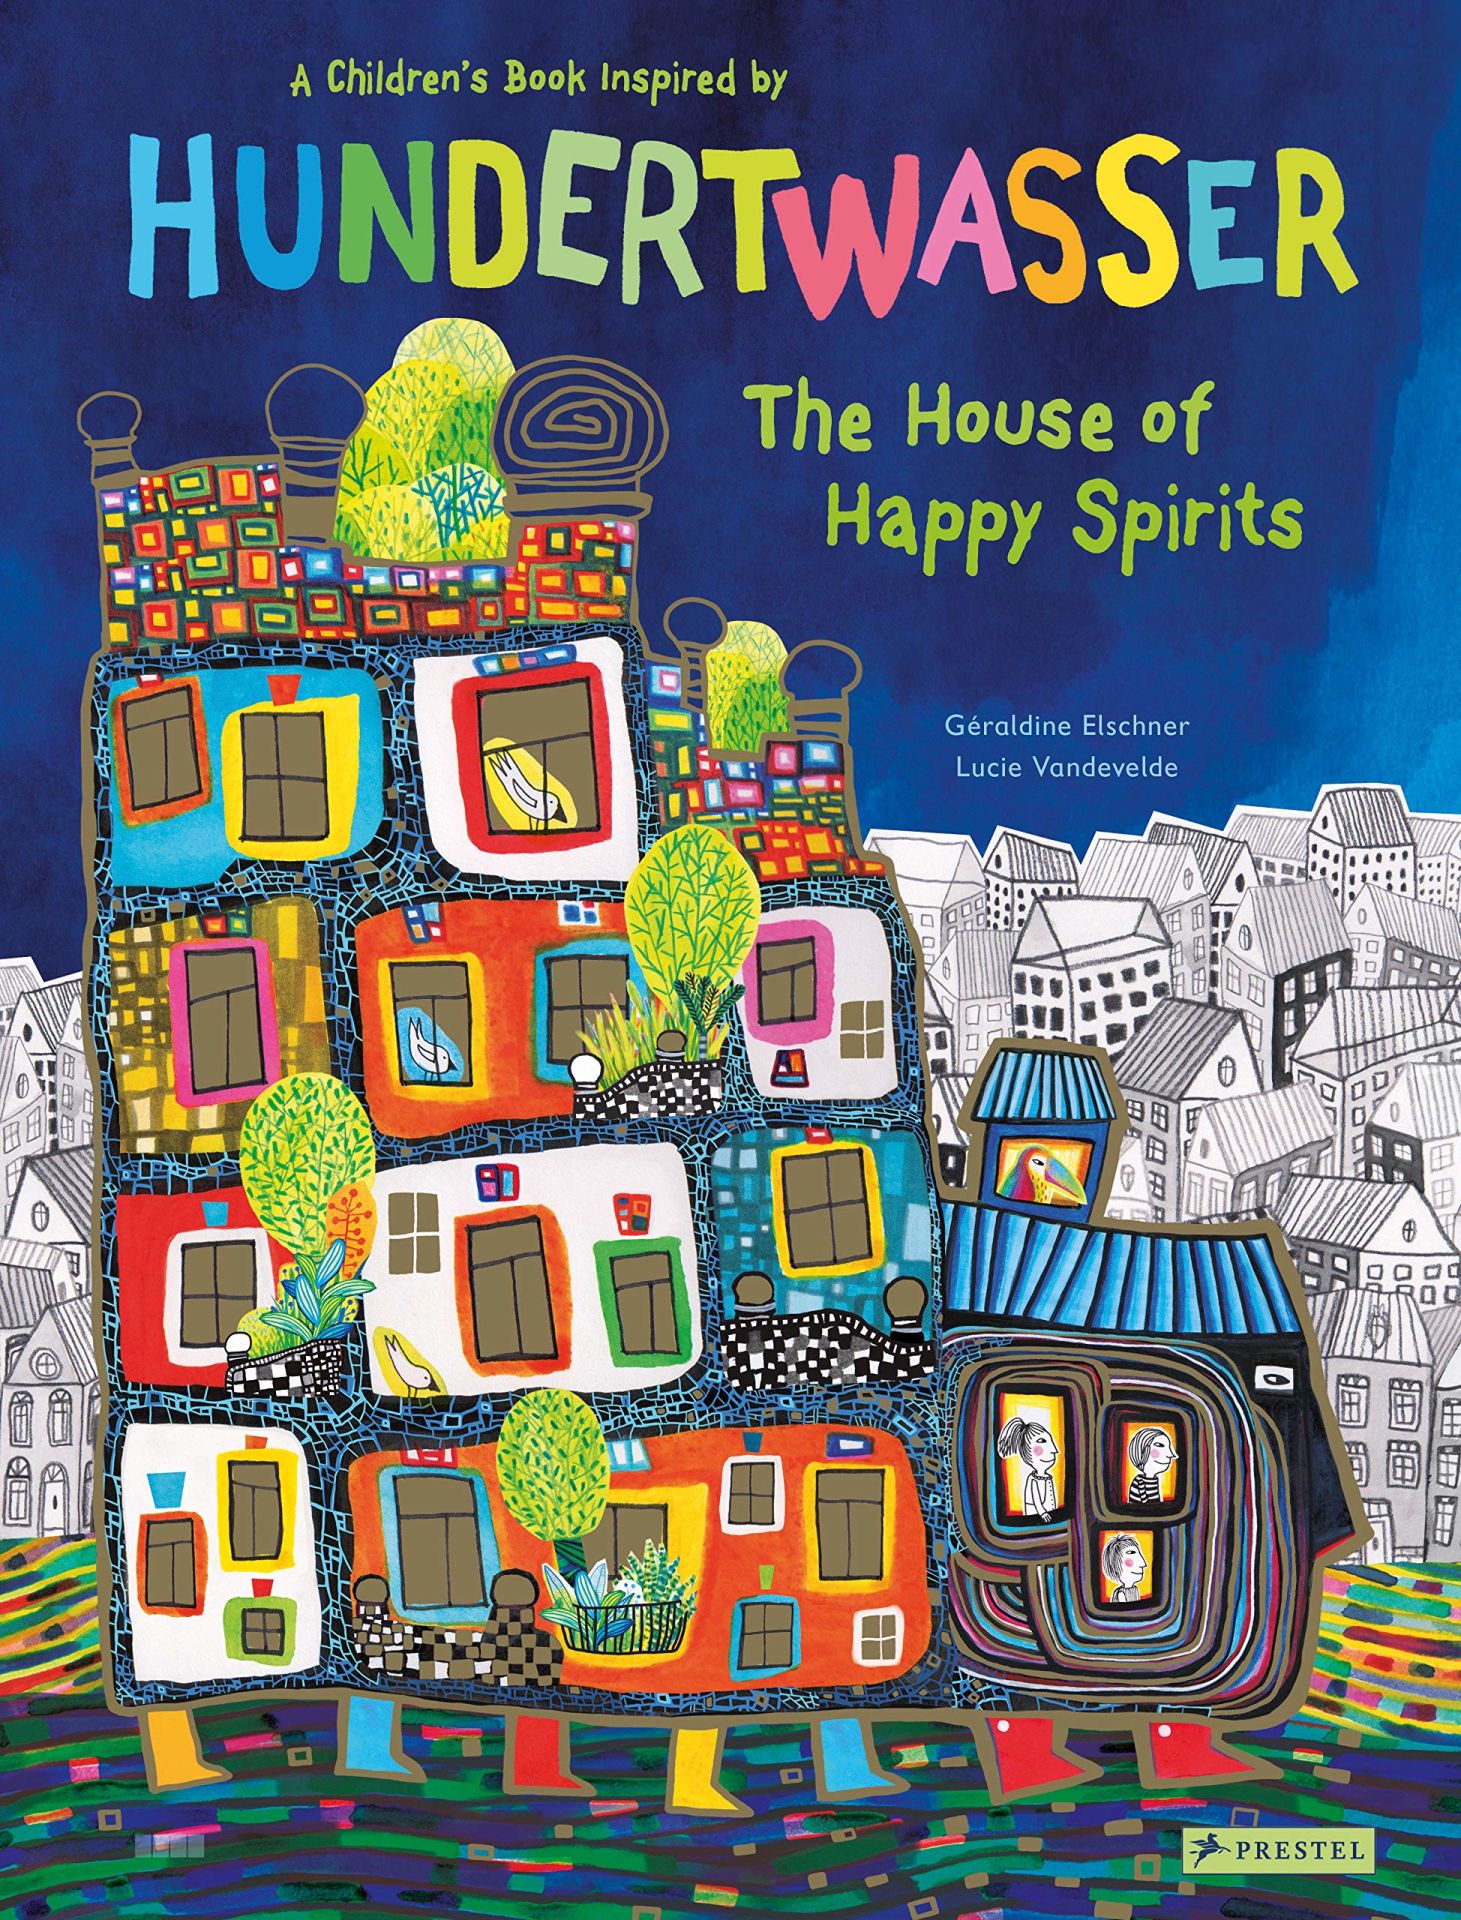 The House of Happy Spirits - Hundertwasser